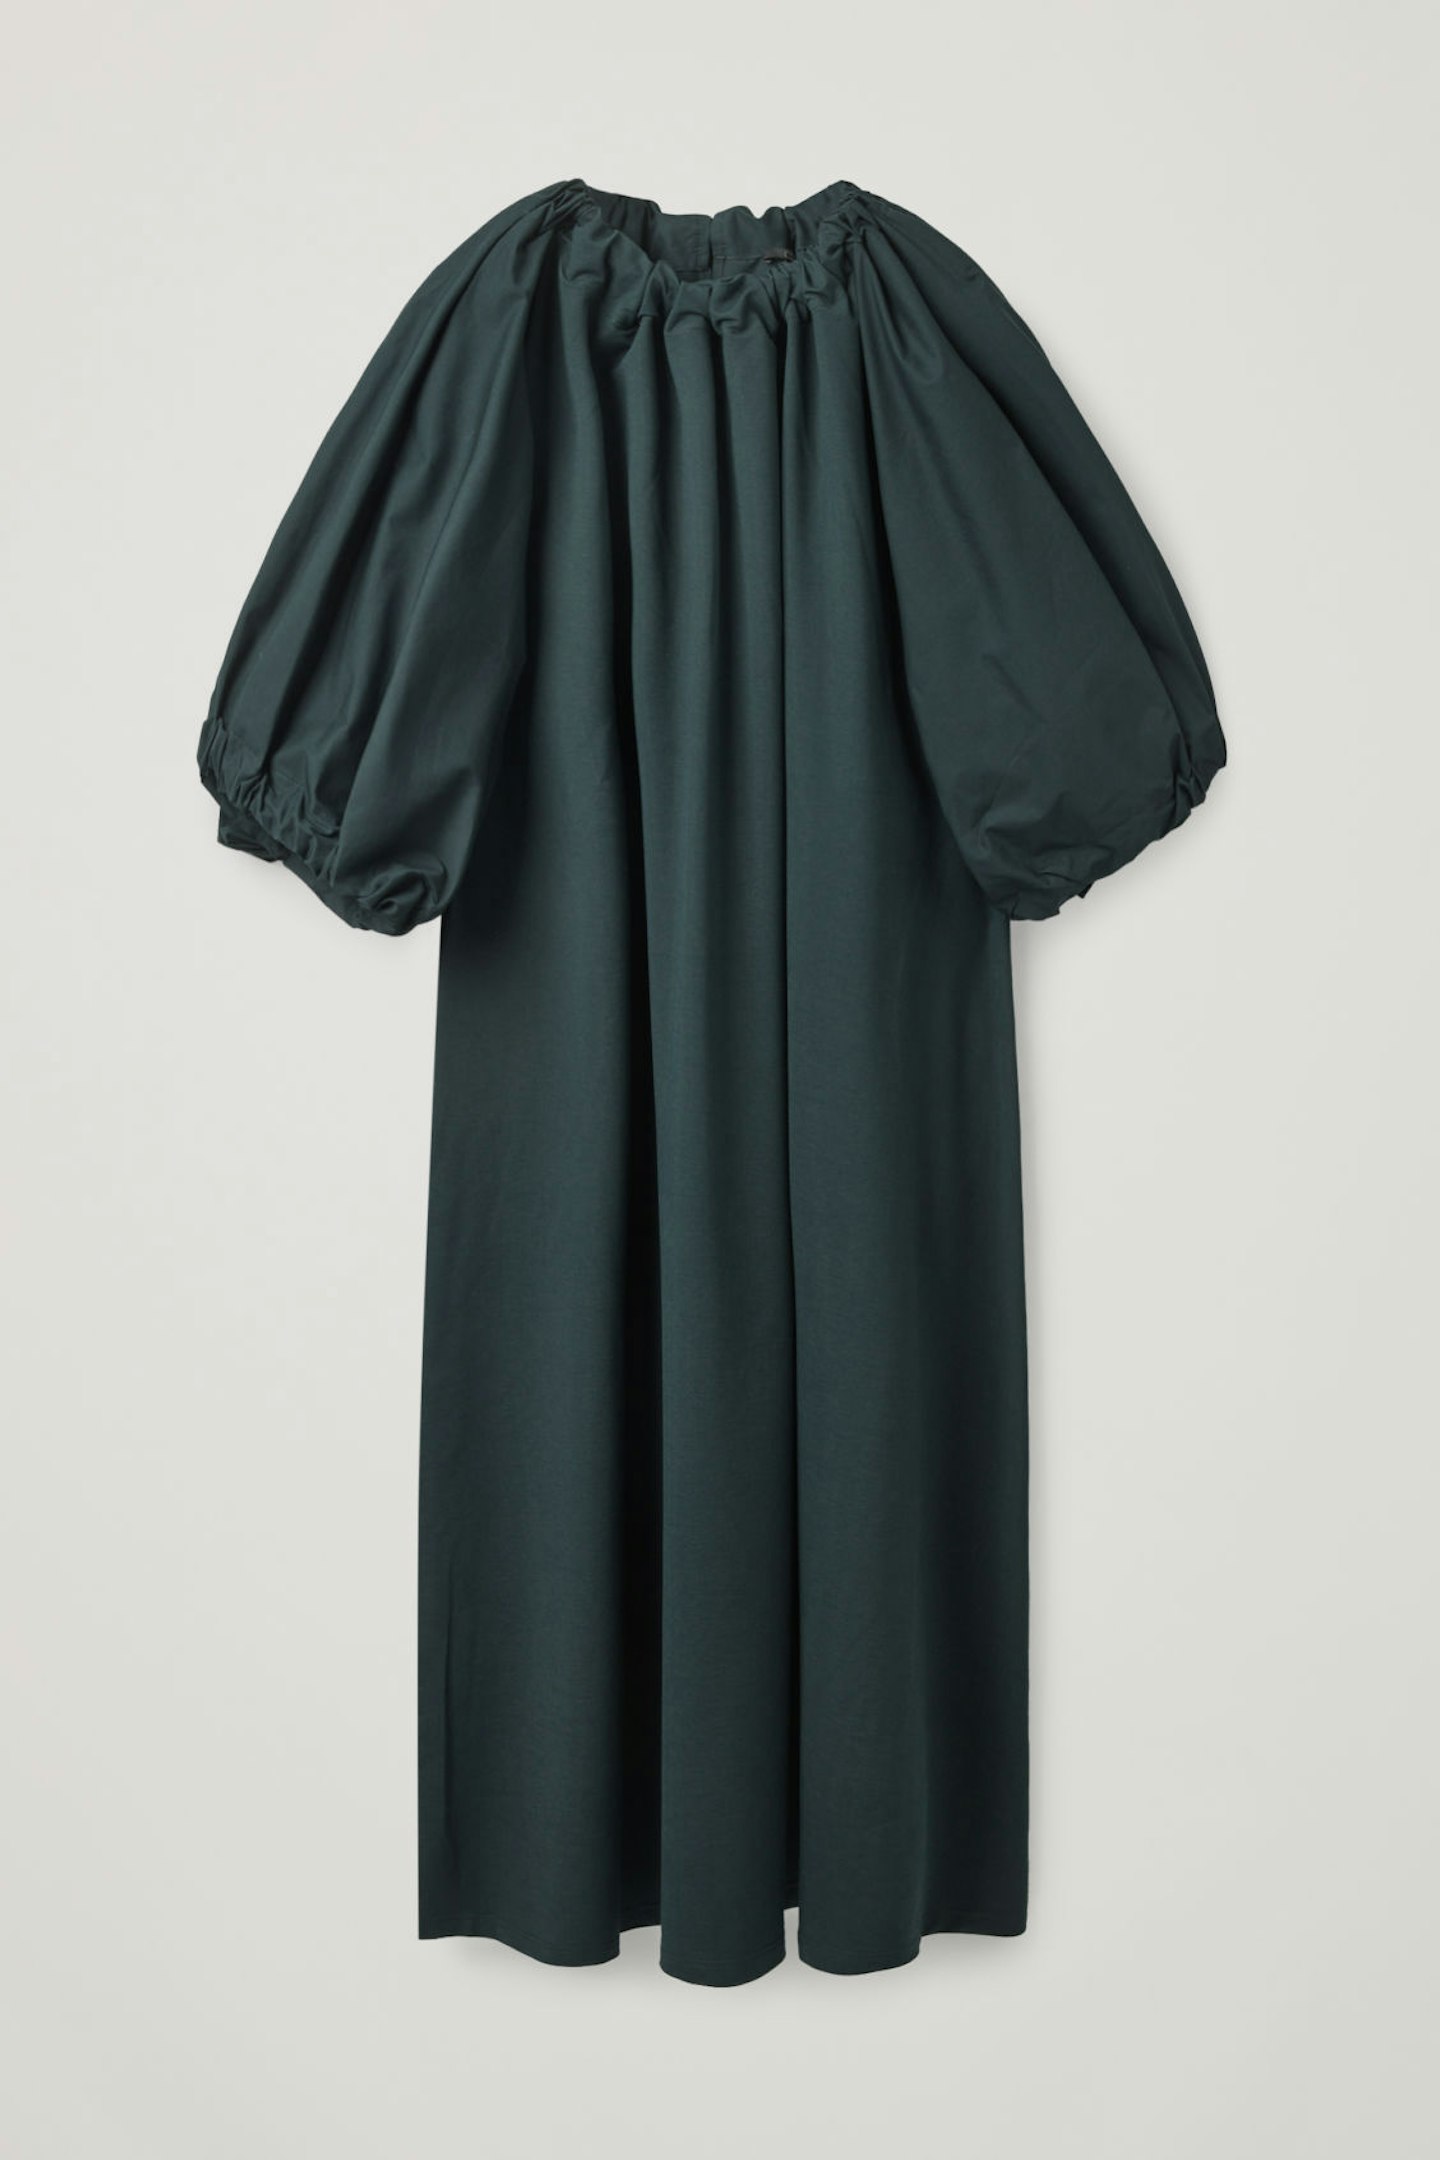 COS, Gathered Dress, £79